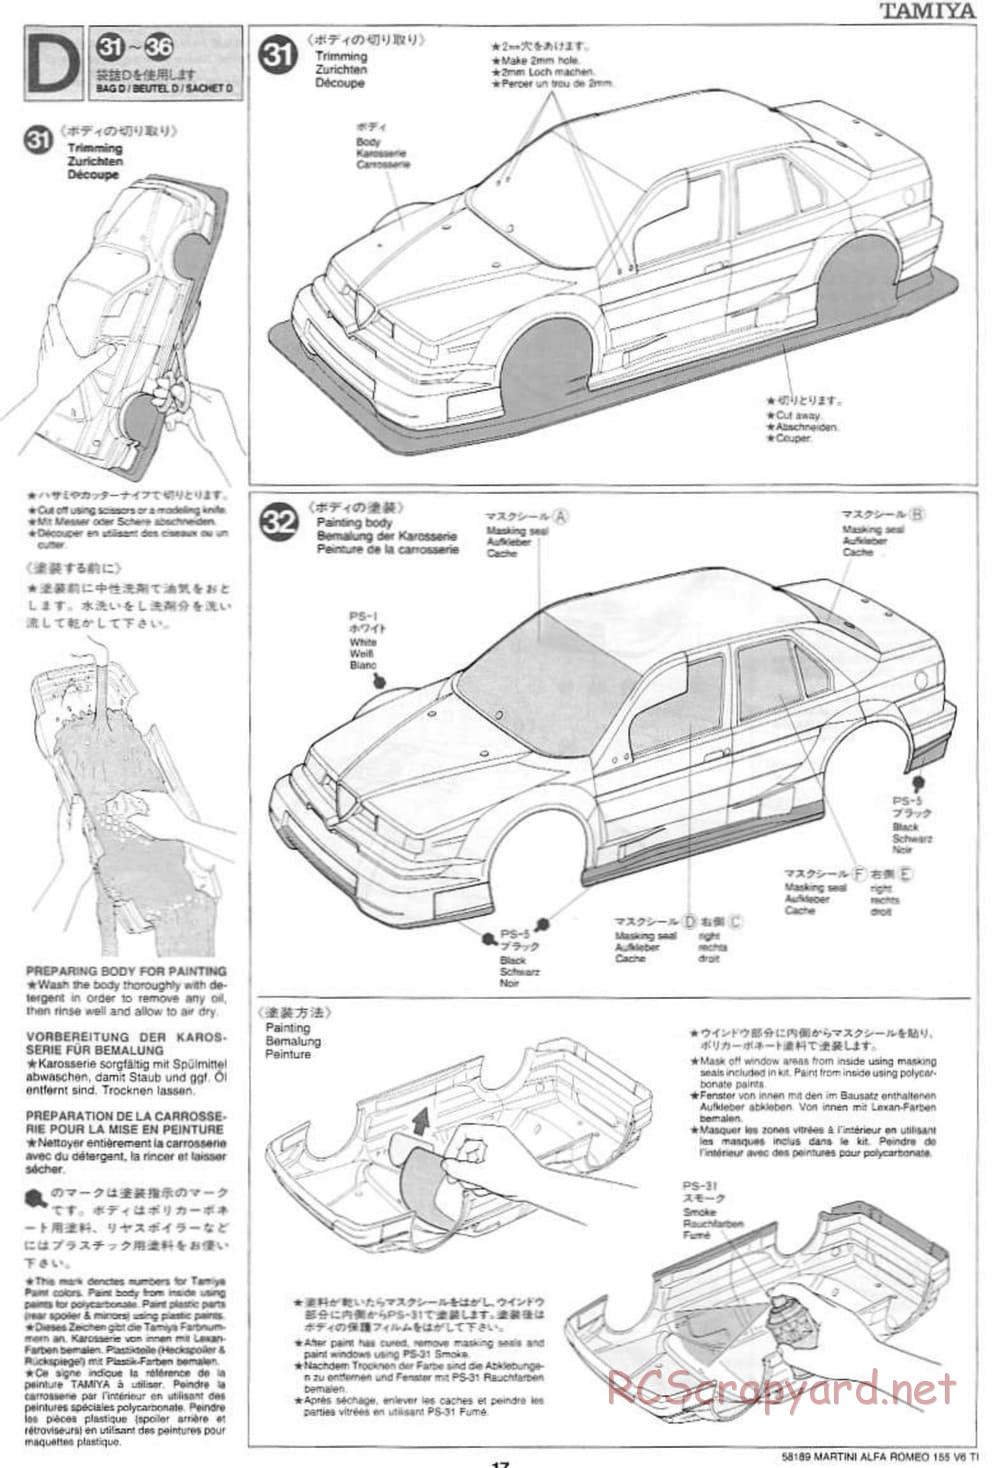 Tamiya - Martini Alfa Romeo 155 V6 TI - TA-03F Chassis - Manual - Page 17